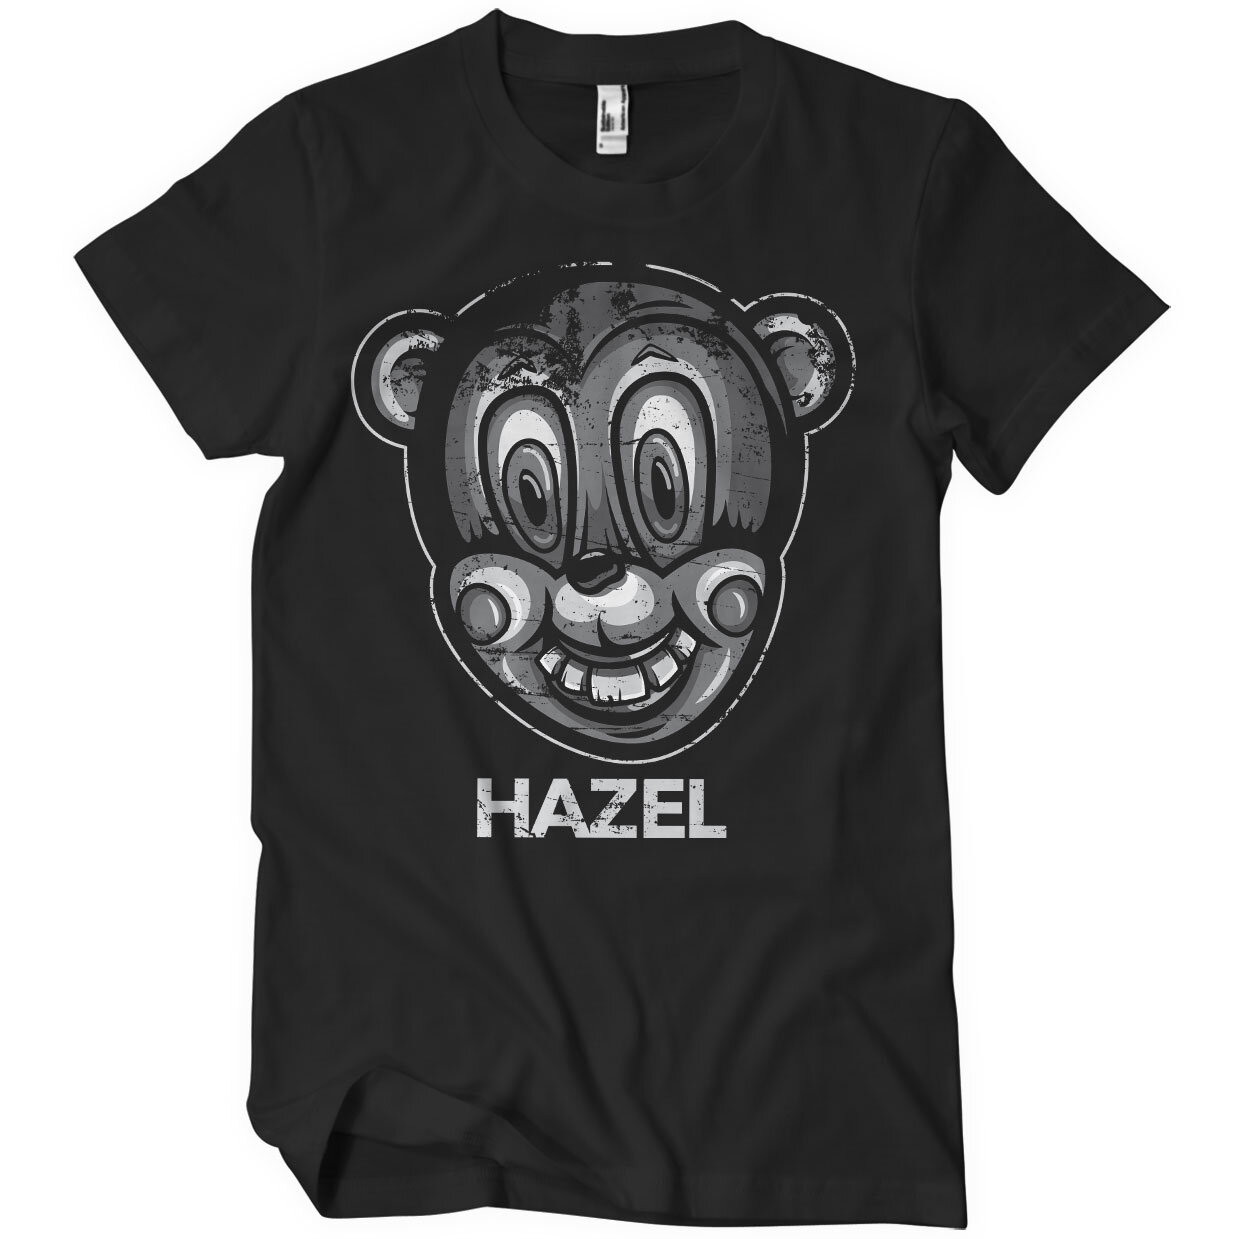 Umbrella Academy - Hazel T-Shirt